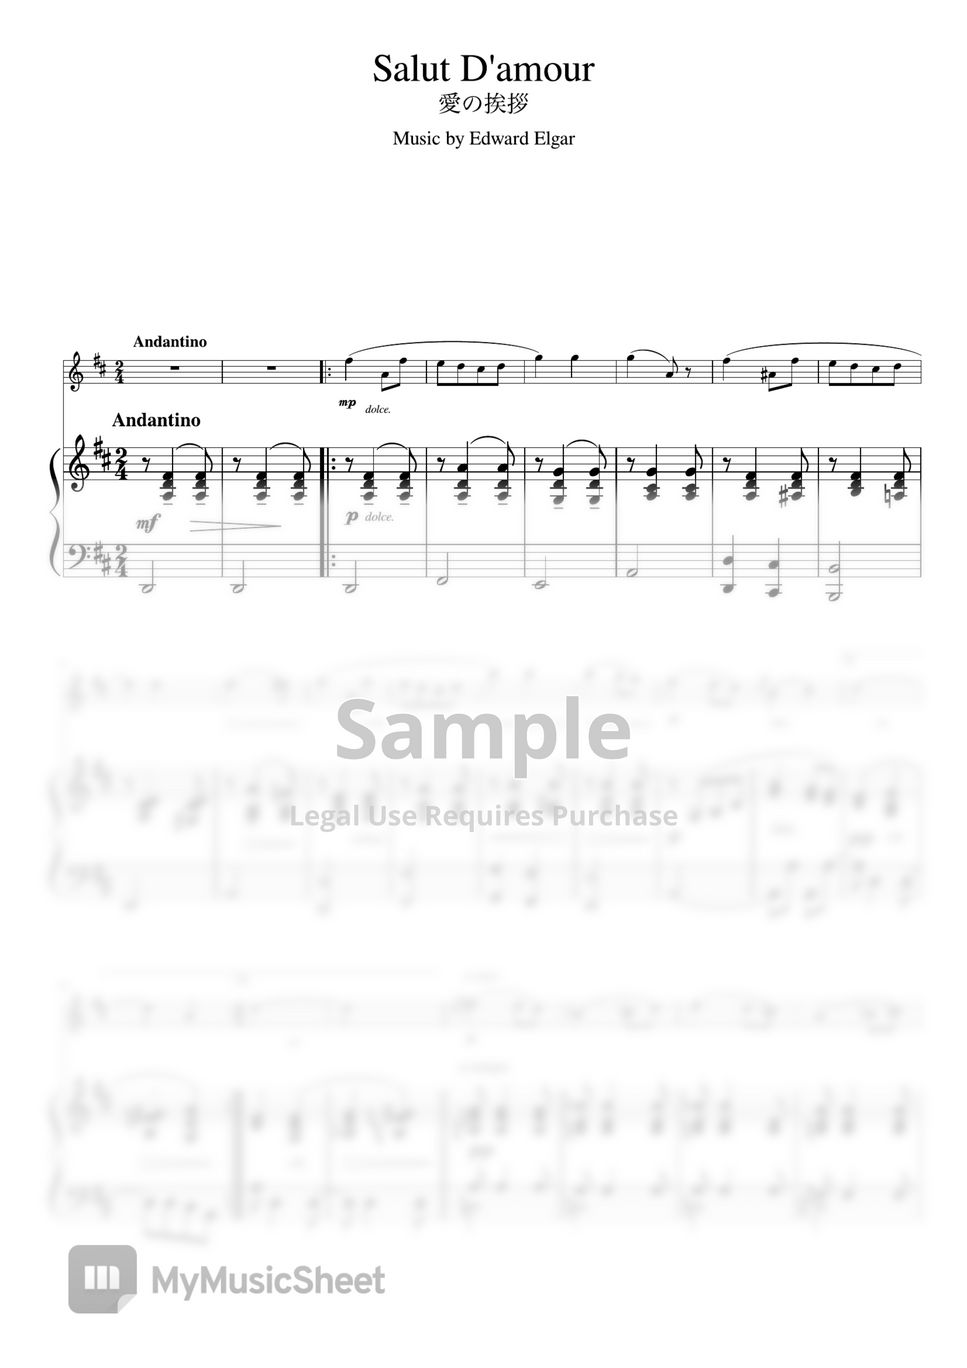 E.Elgar - Salut D'amour (Ddur  flute&piano) by pfkaori